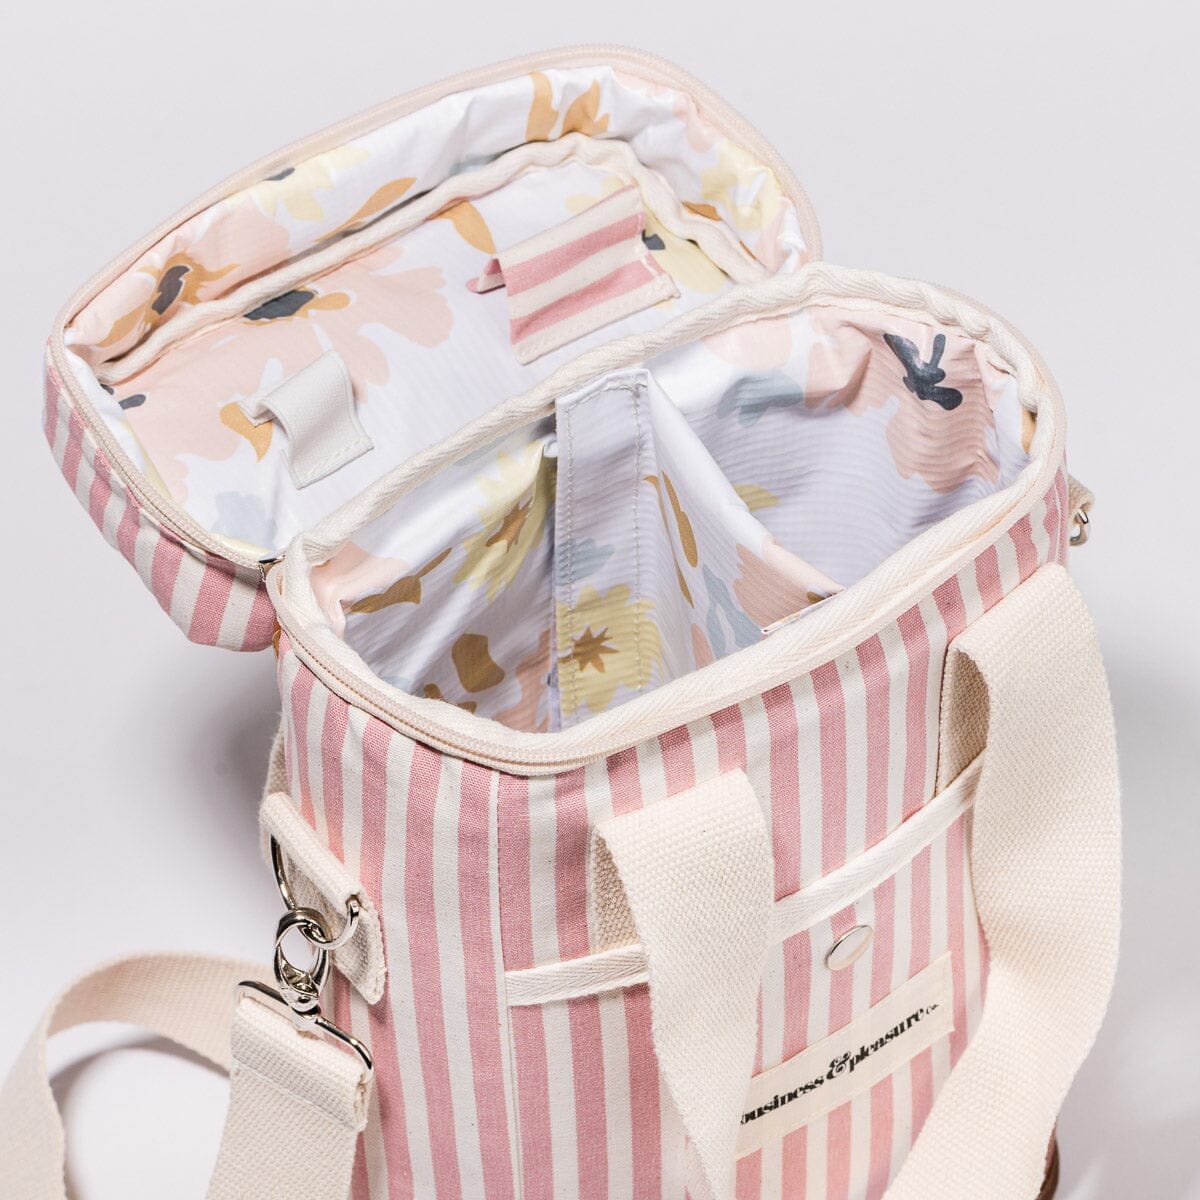 The Wine Cooler Tote Bag - Laurens Pink Stripe Wine Cooler Tote Bag Business & Pleasure Co 